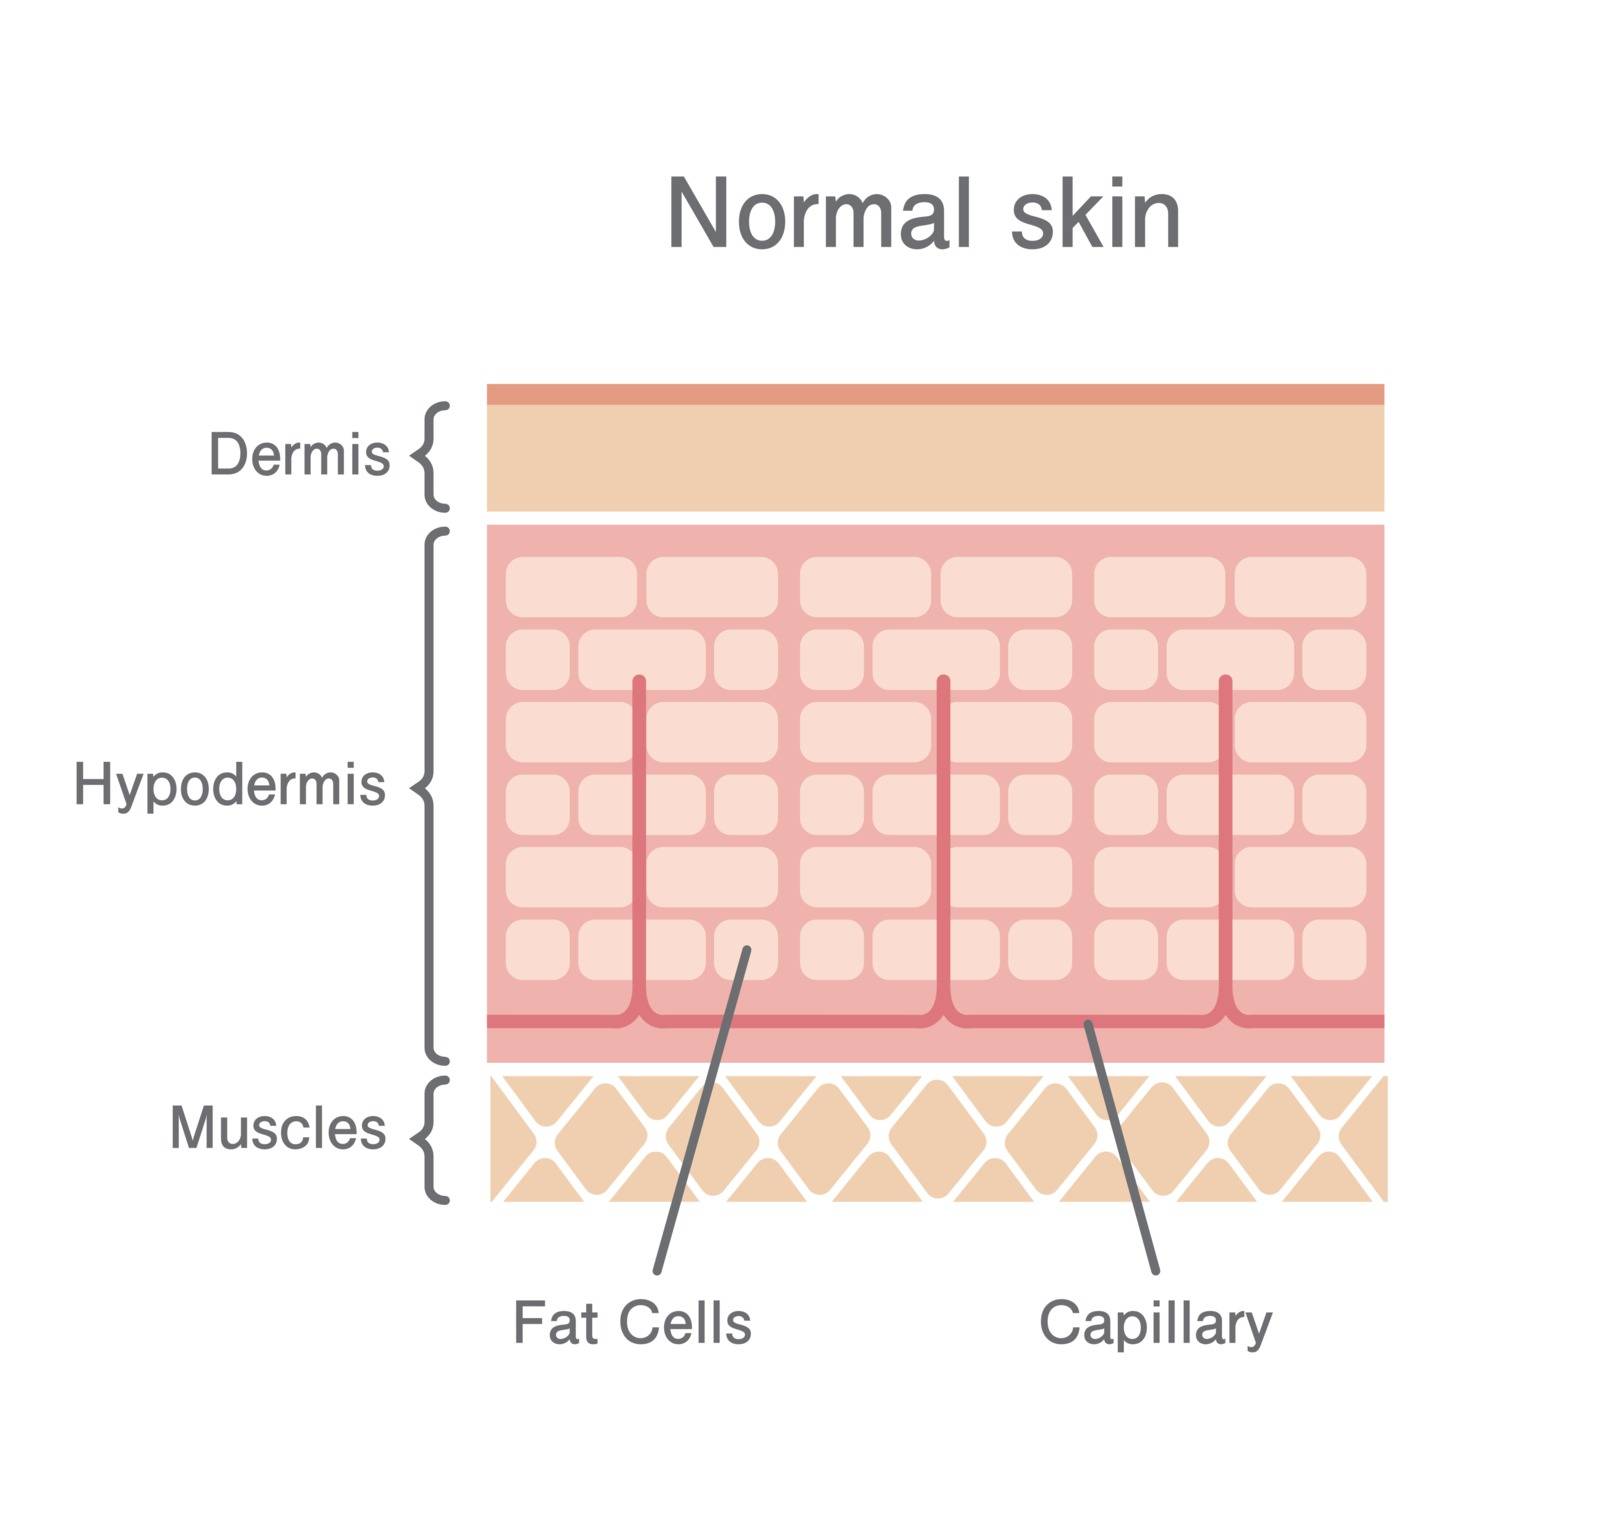 Normal skin illustration